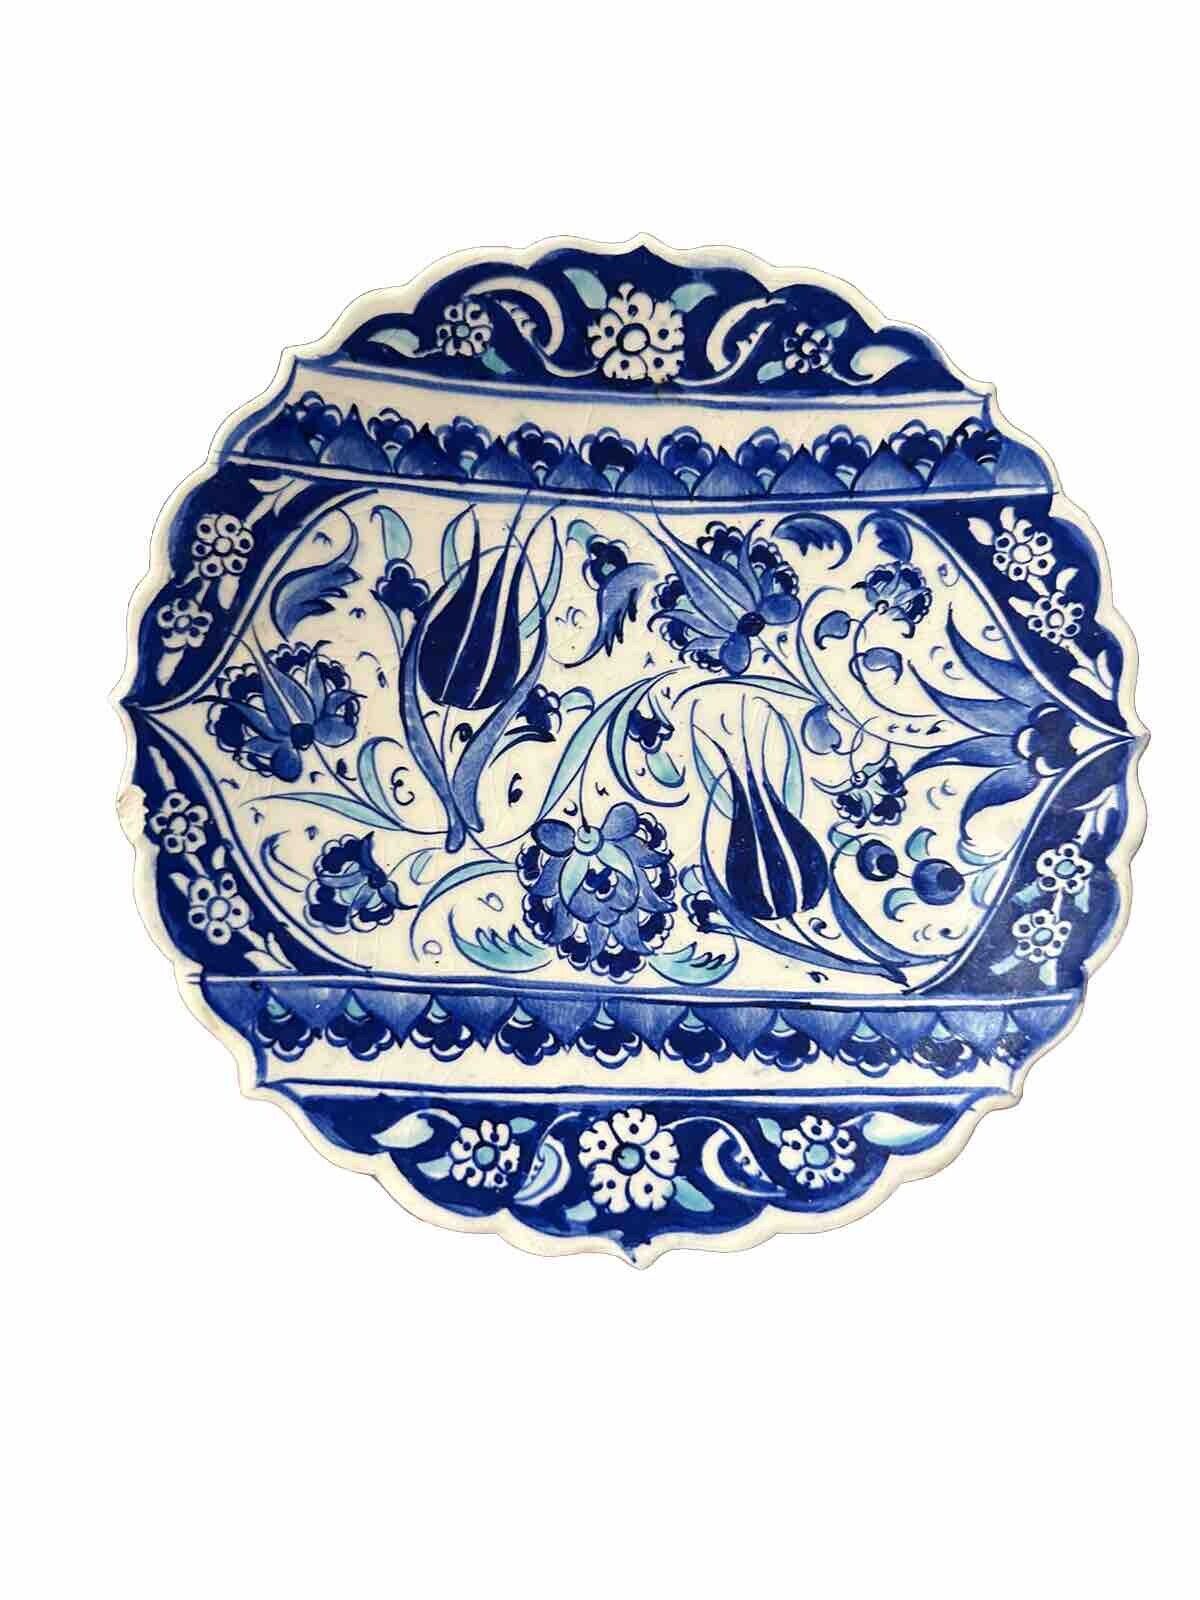 Handmade Blue & White Floral Turkish Decorative Dish Plate